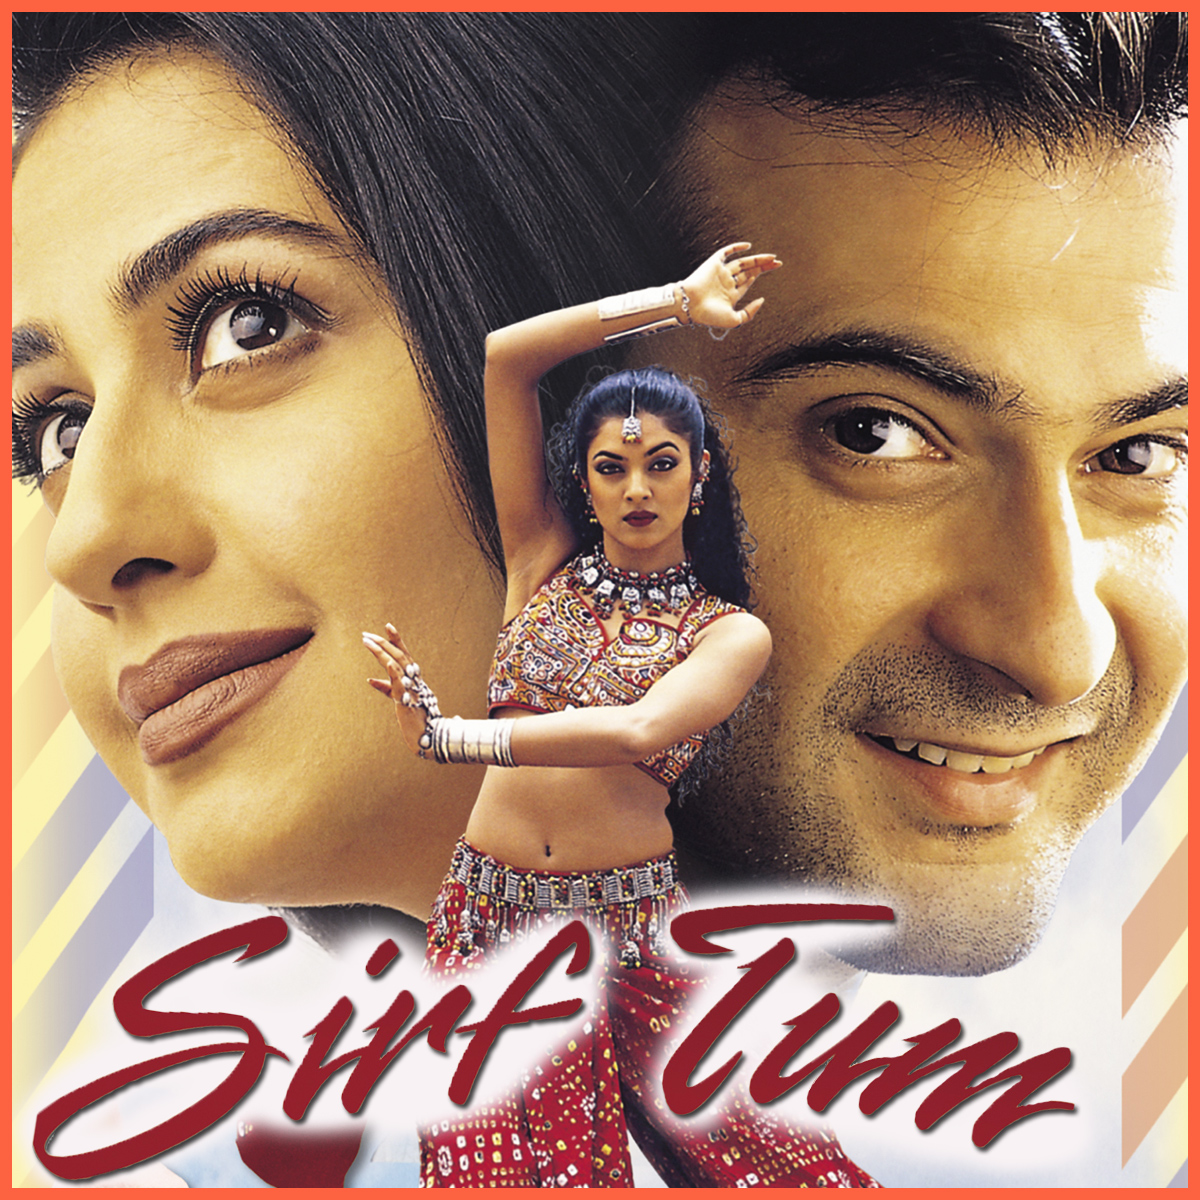 Hindi Film Sirf Tum Mp3 Songs Downloadl